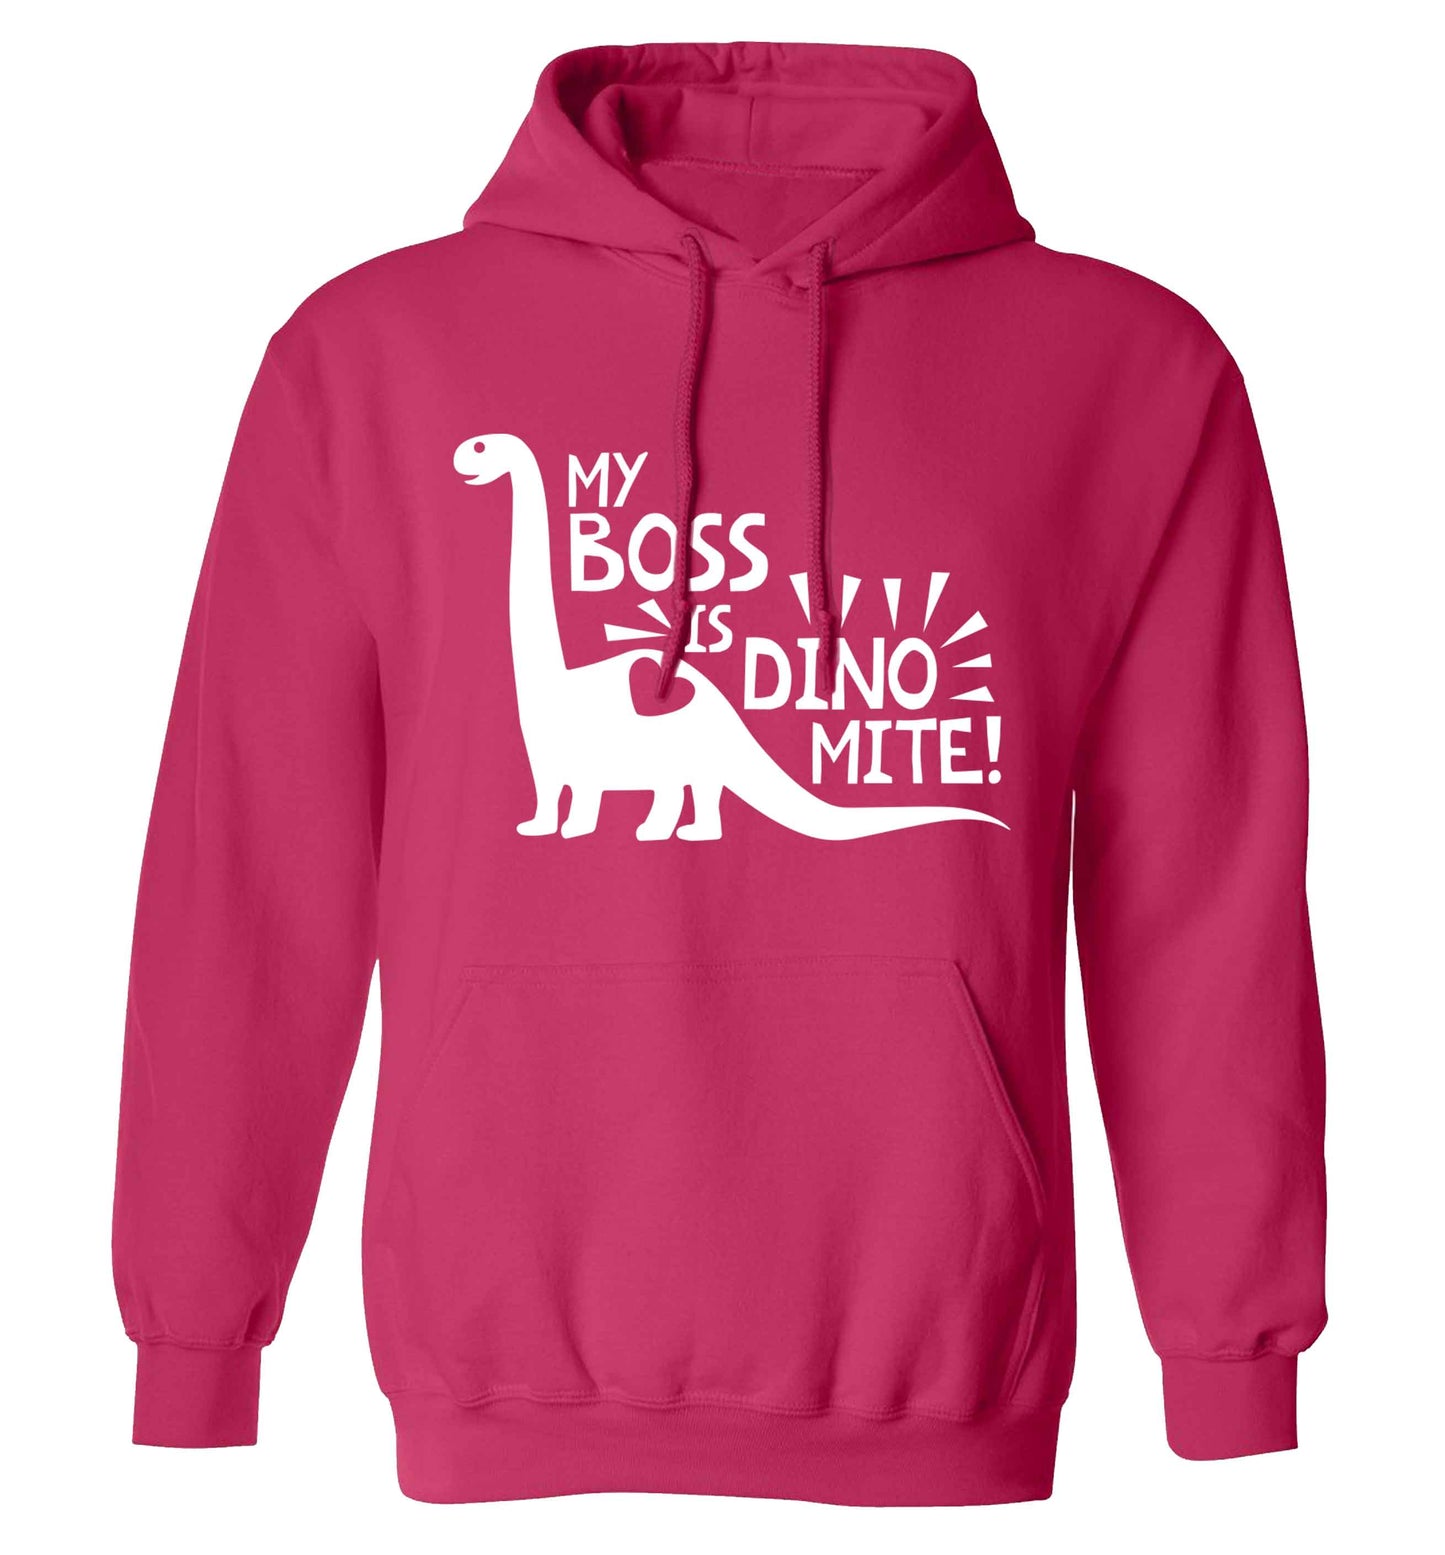 My boss is dinomite! adults unisex pink hoodie 2XL